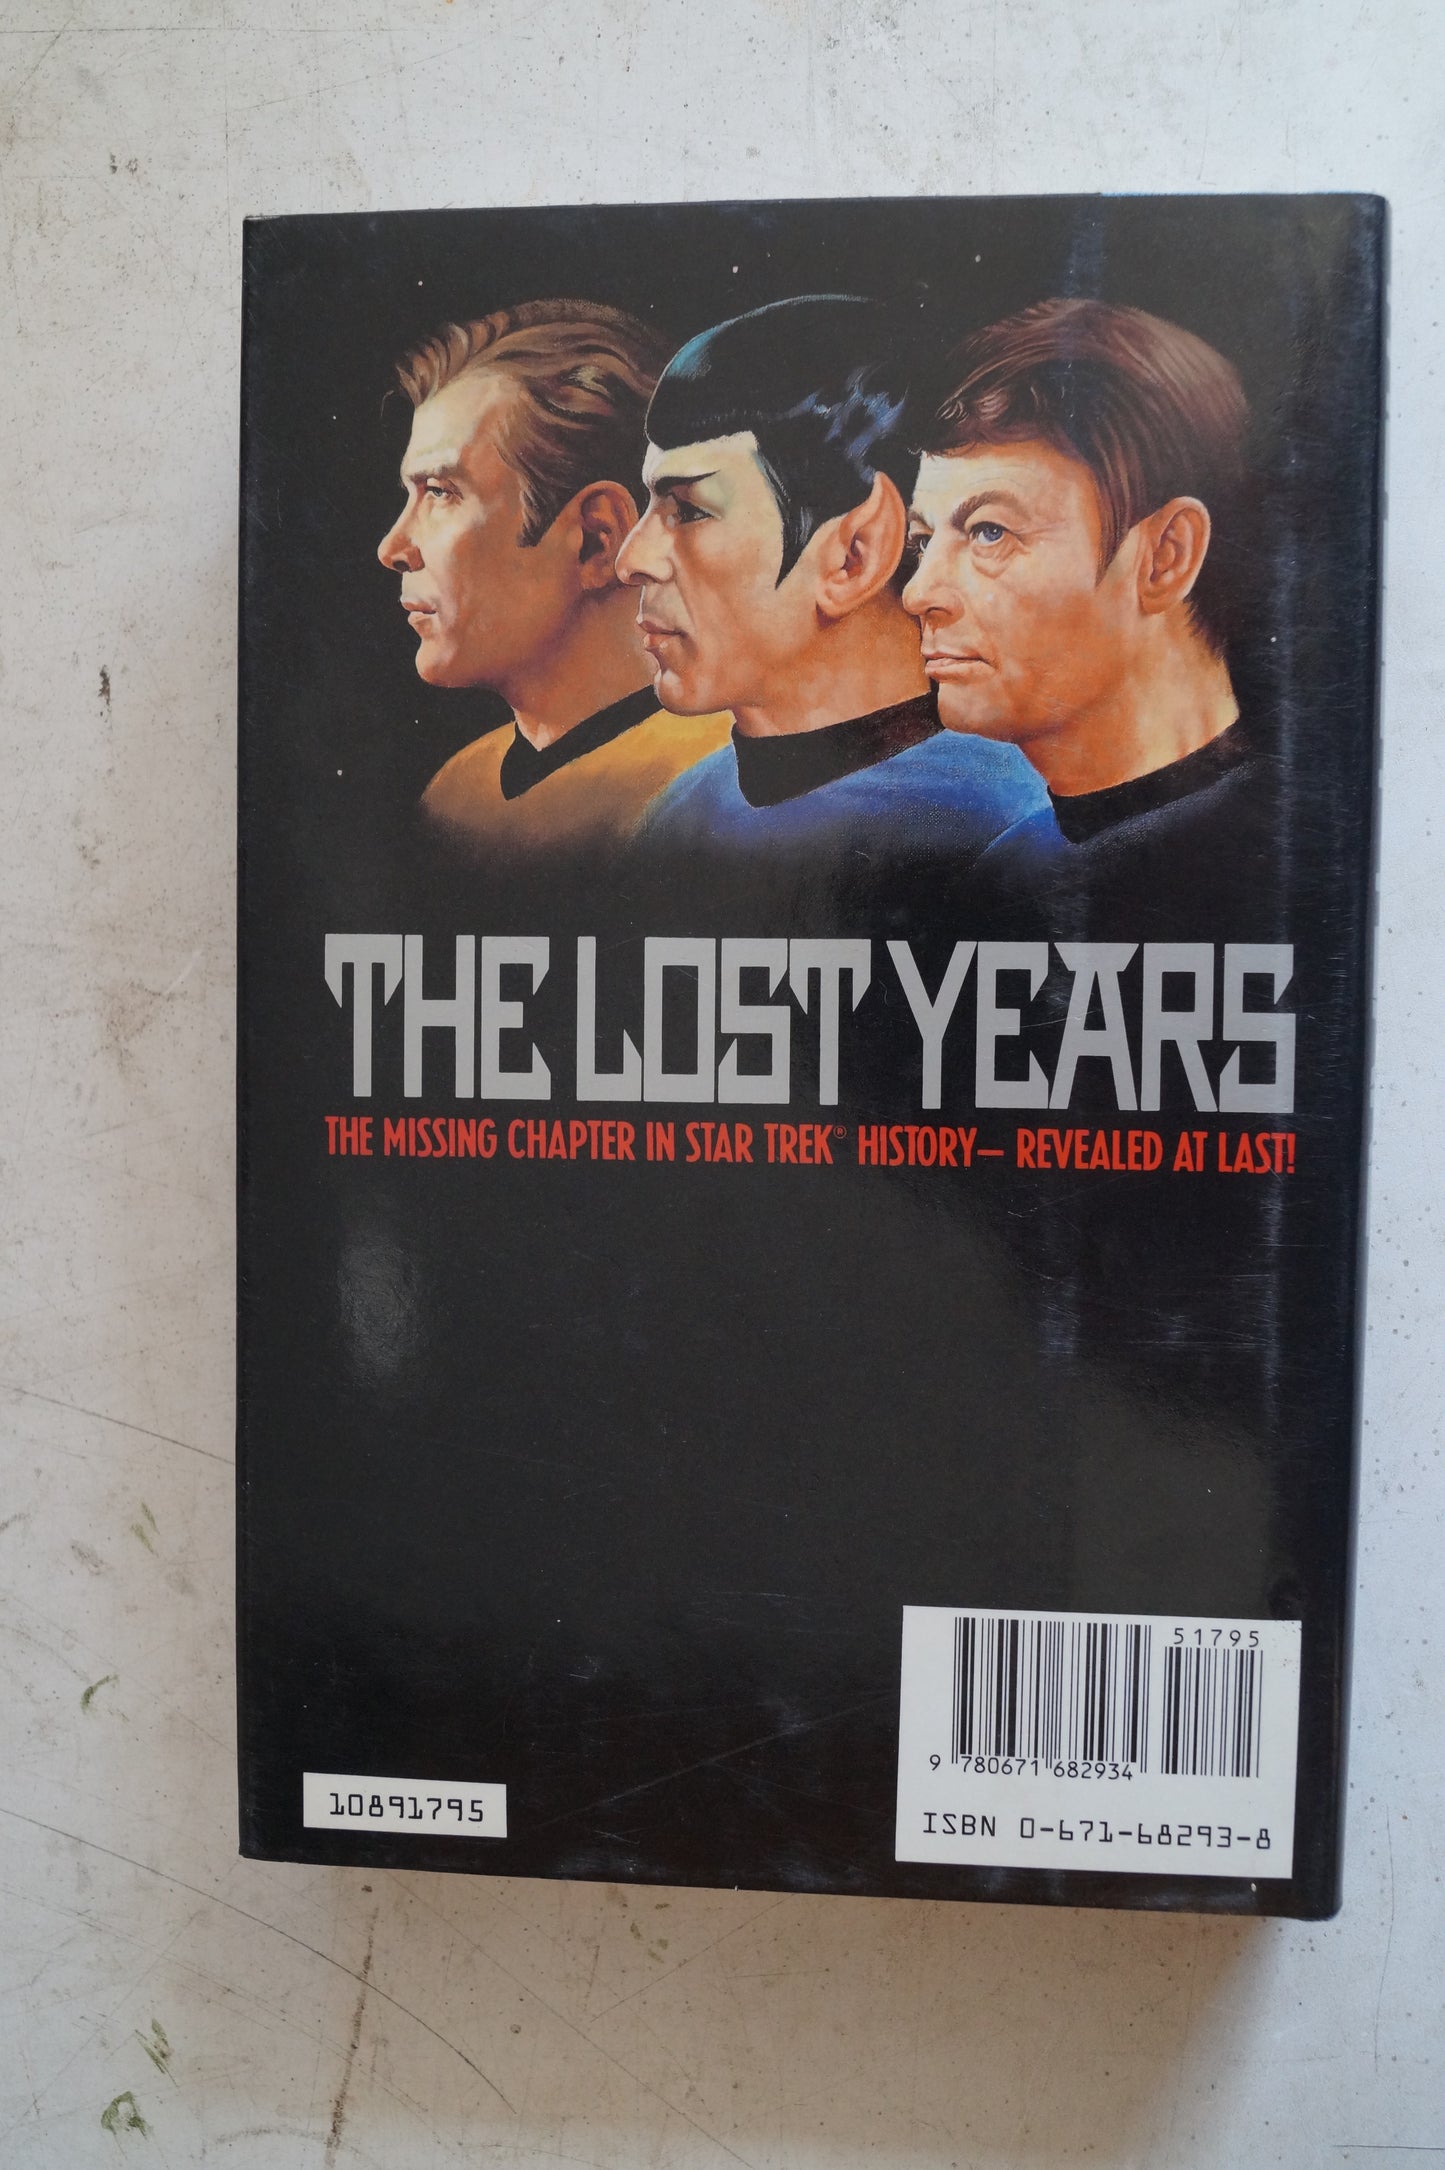 Star Trek The Lost years by JM Dillard